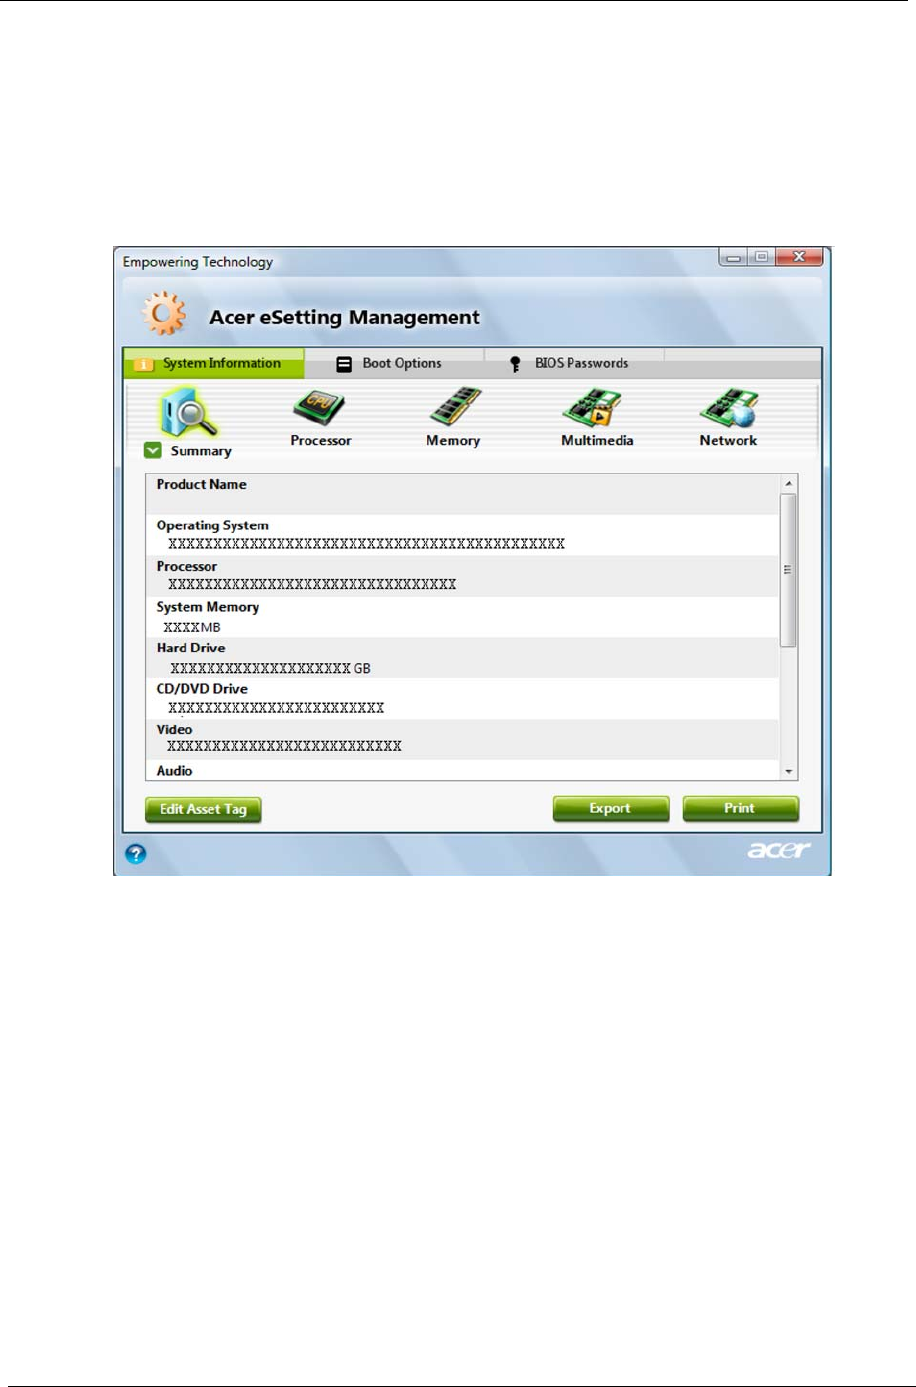 Acer eaudio management windows 7 service pack